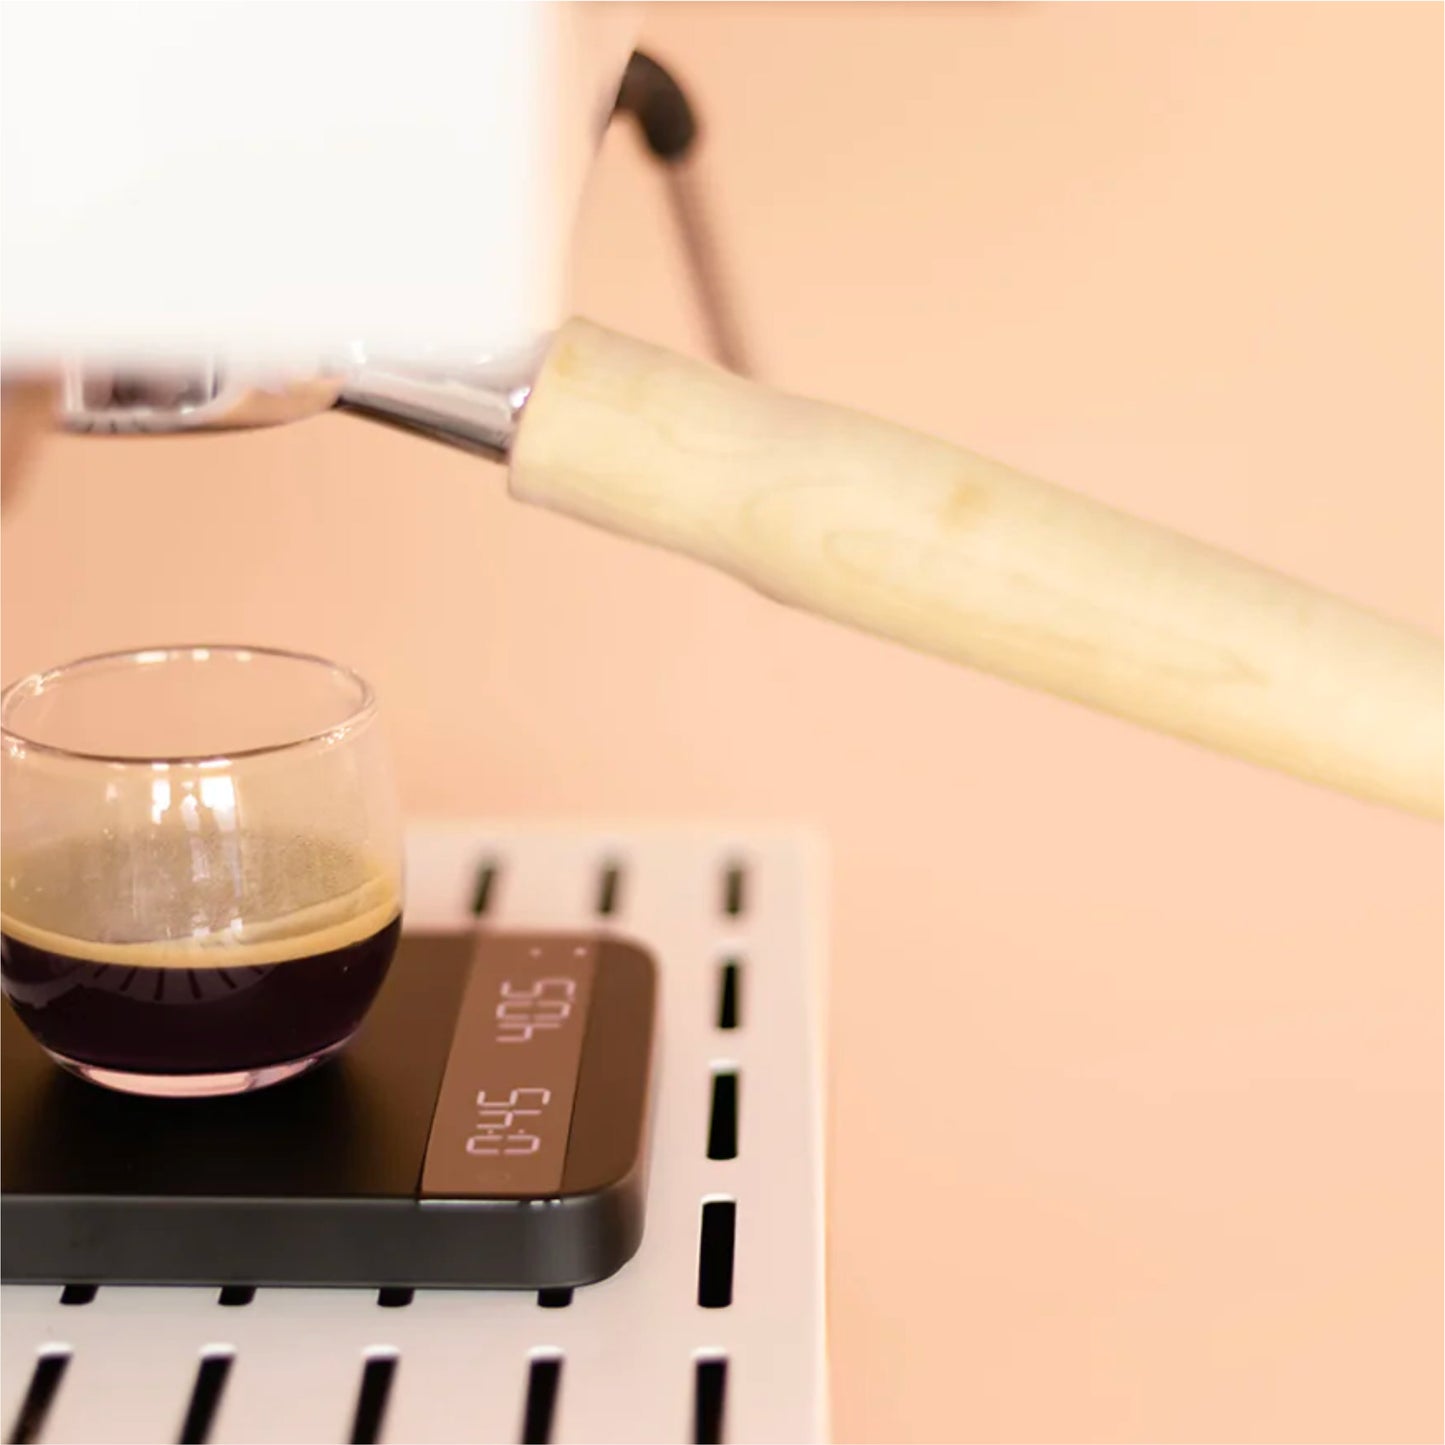 Acaia Lunar Coffee Scale (Black)